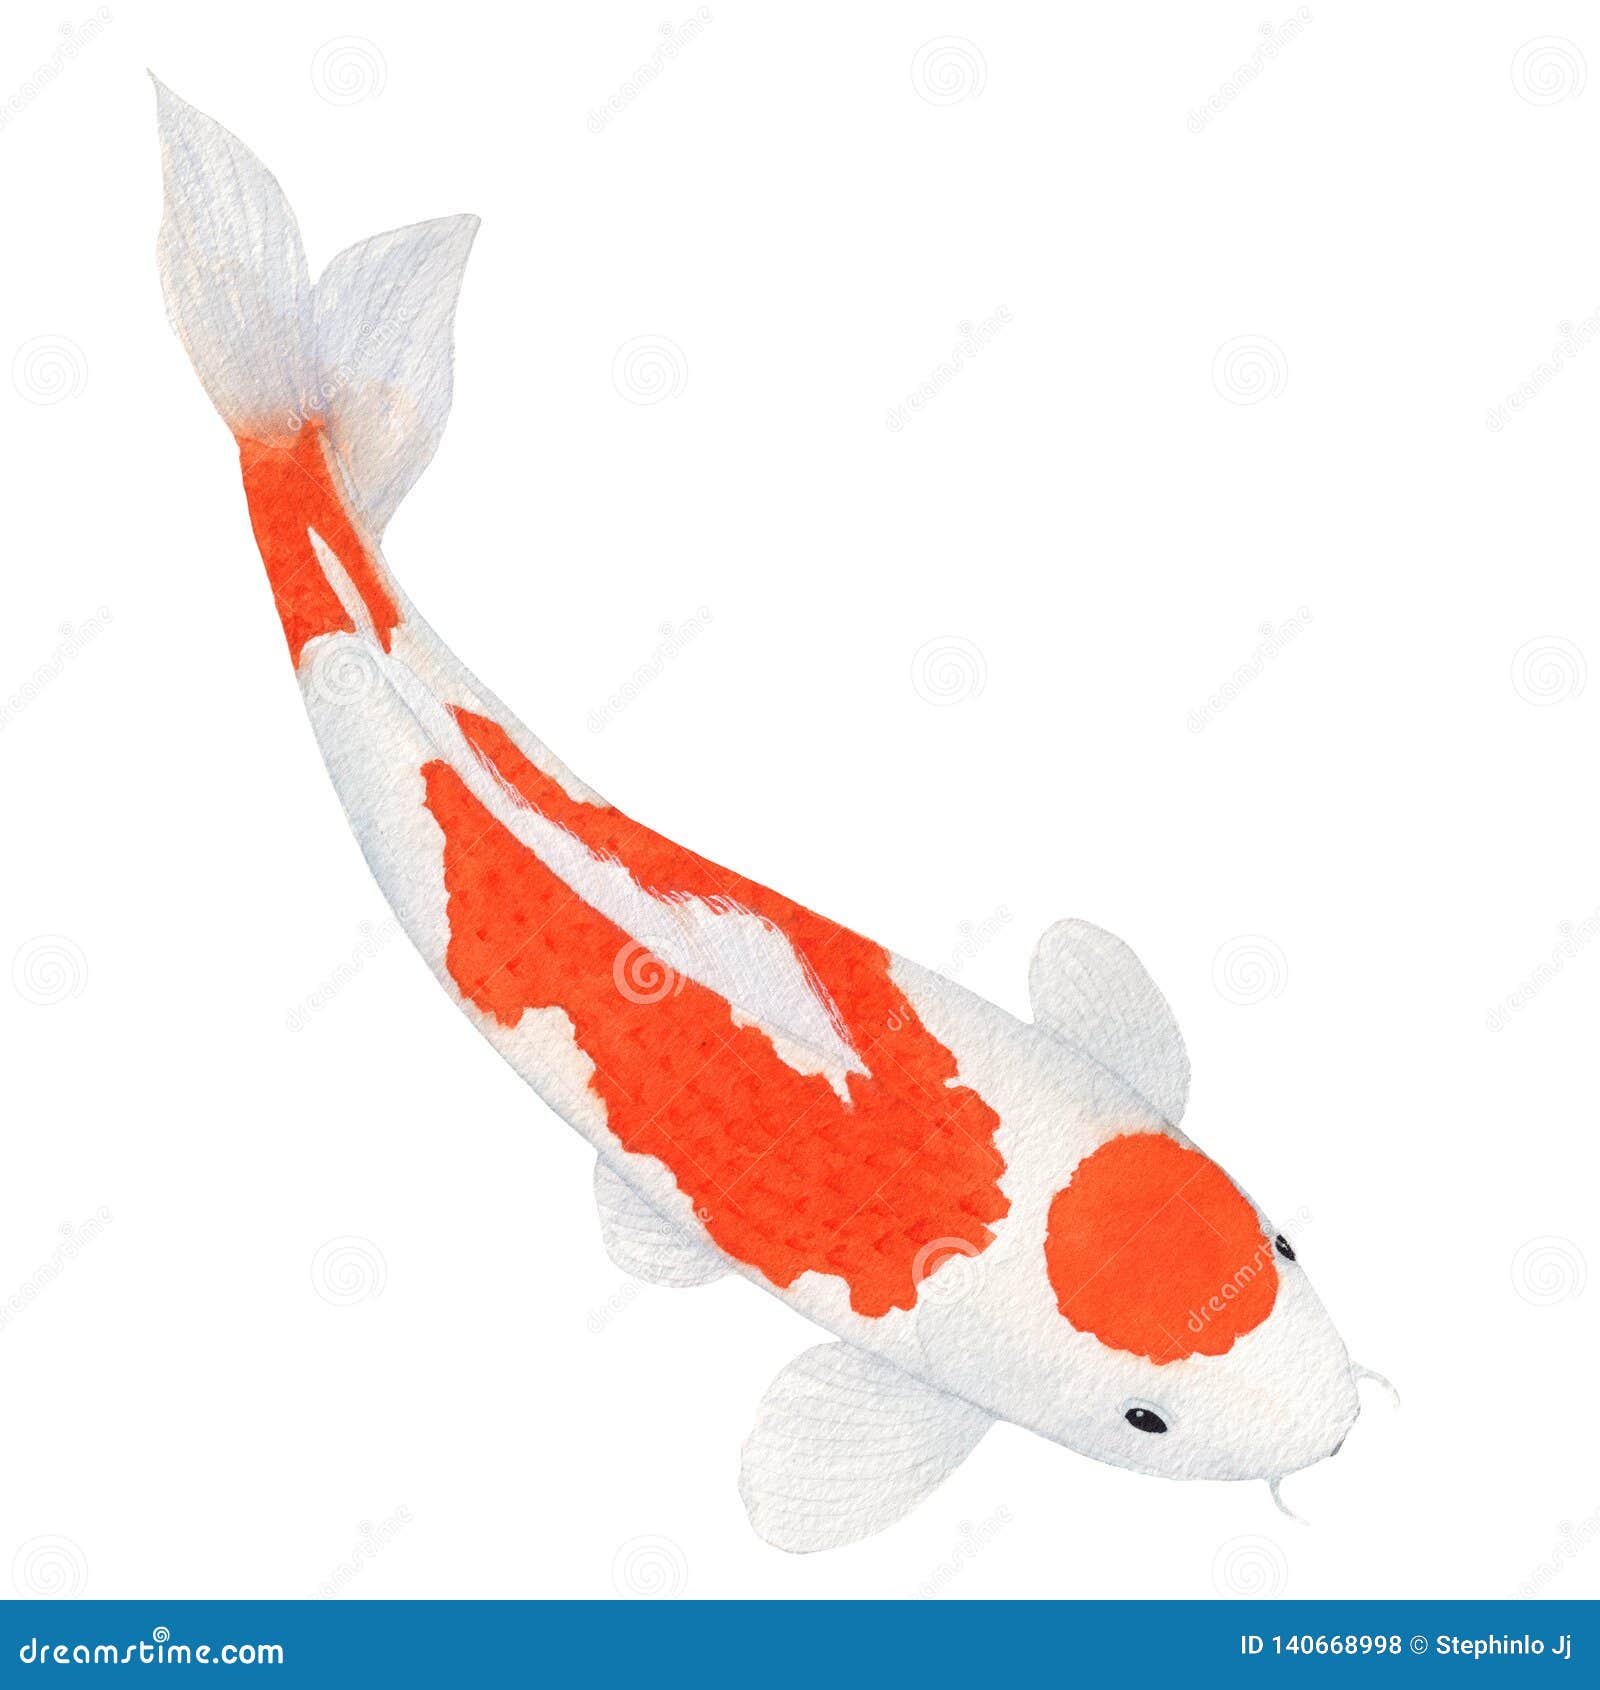 Modelo de facebook com conceito de peixe koi, estilo aquarela.